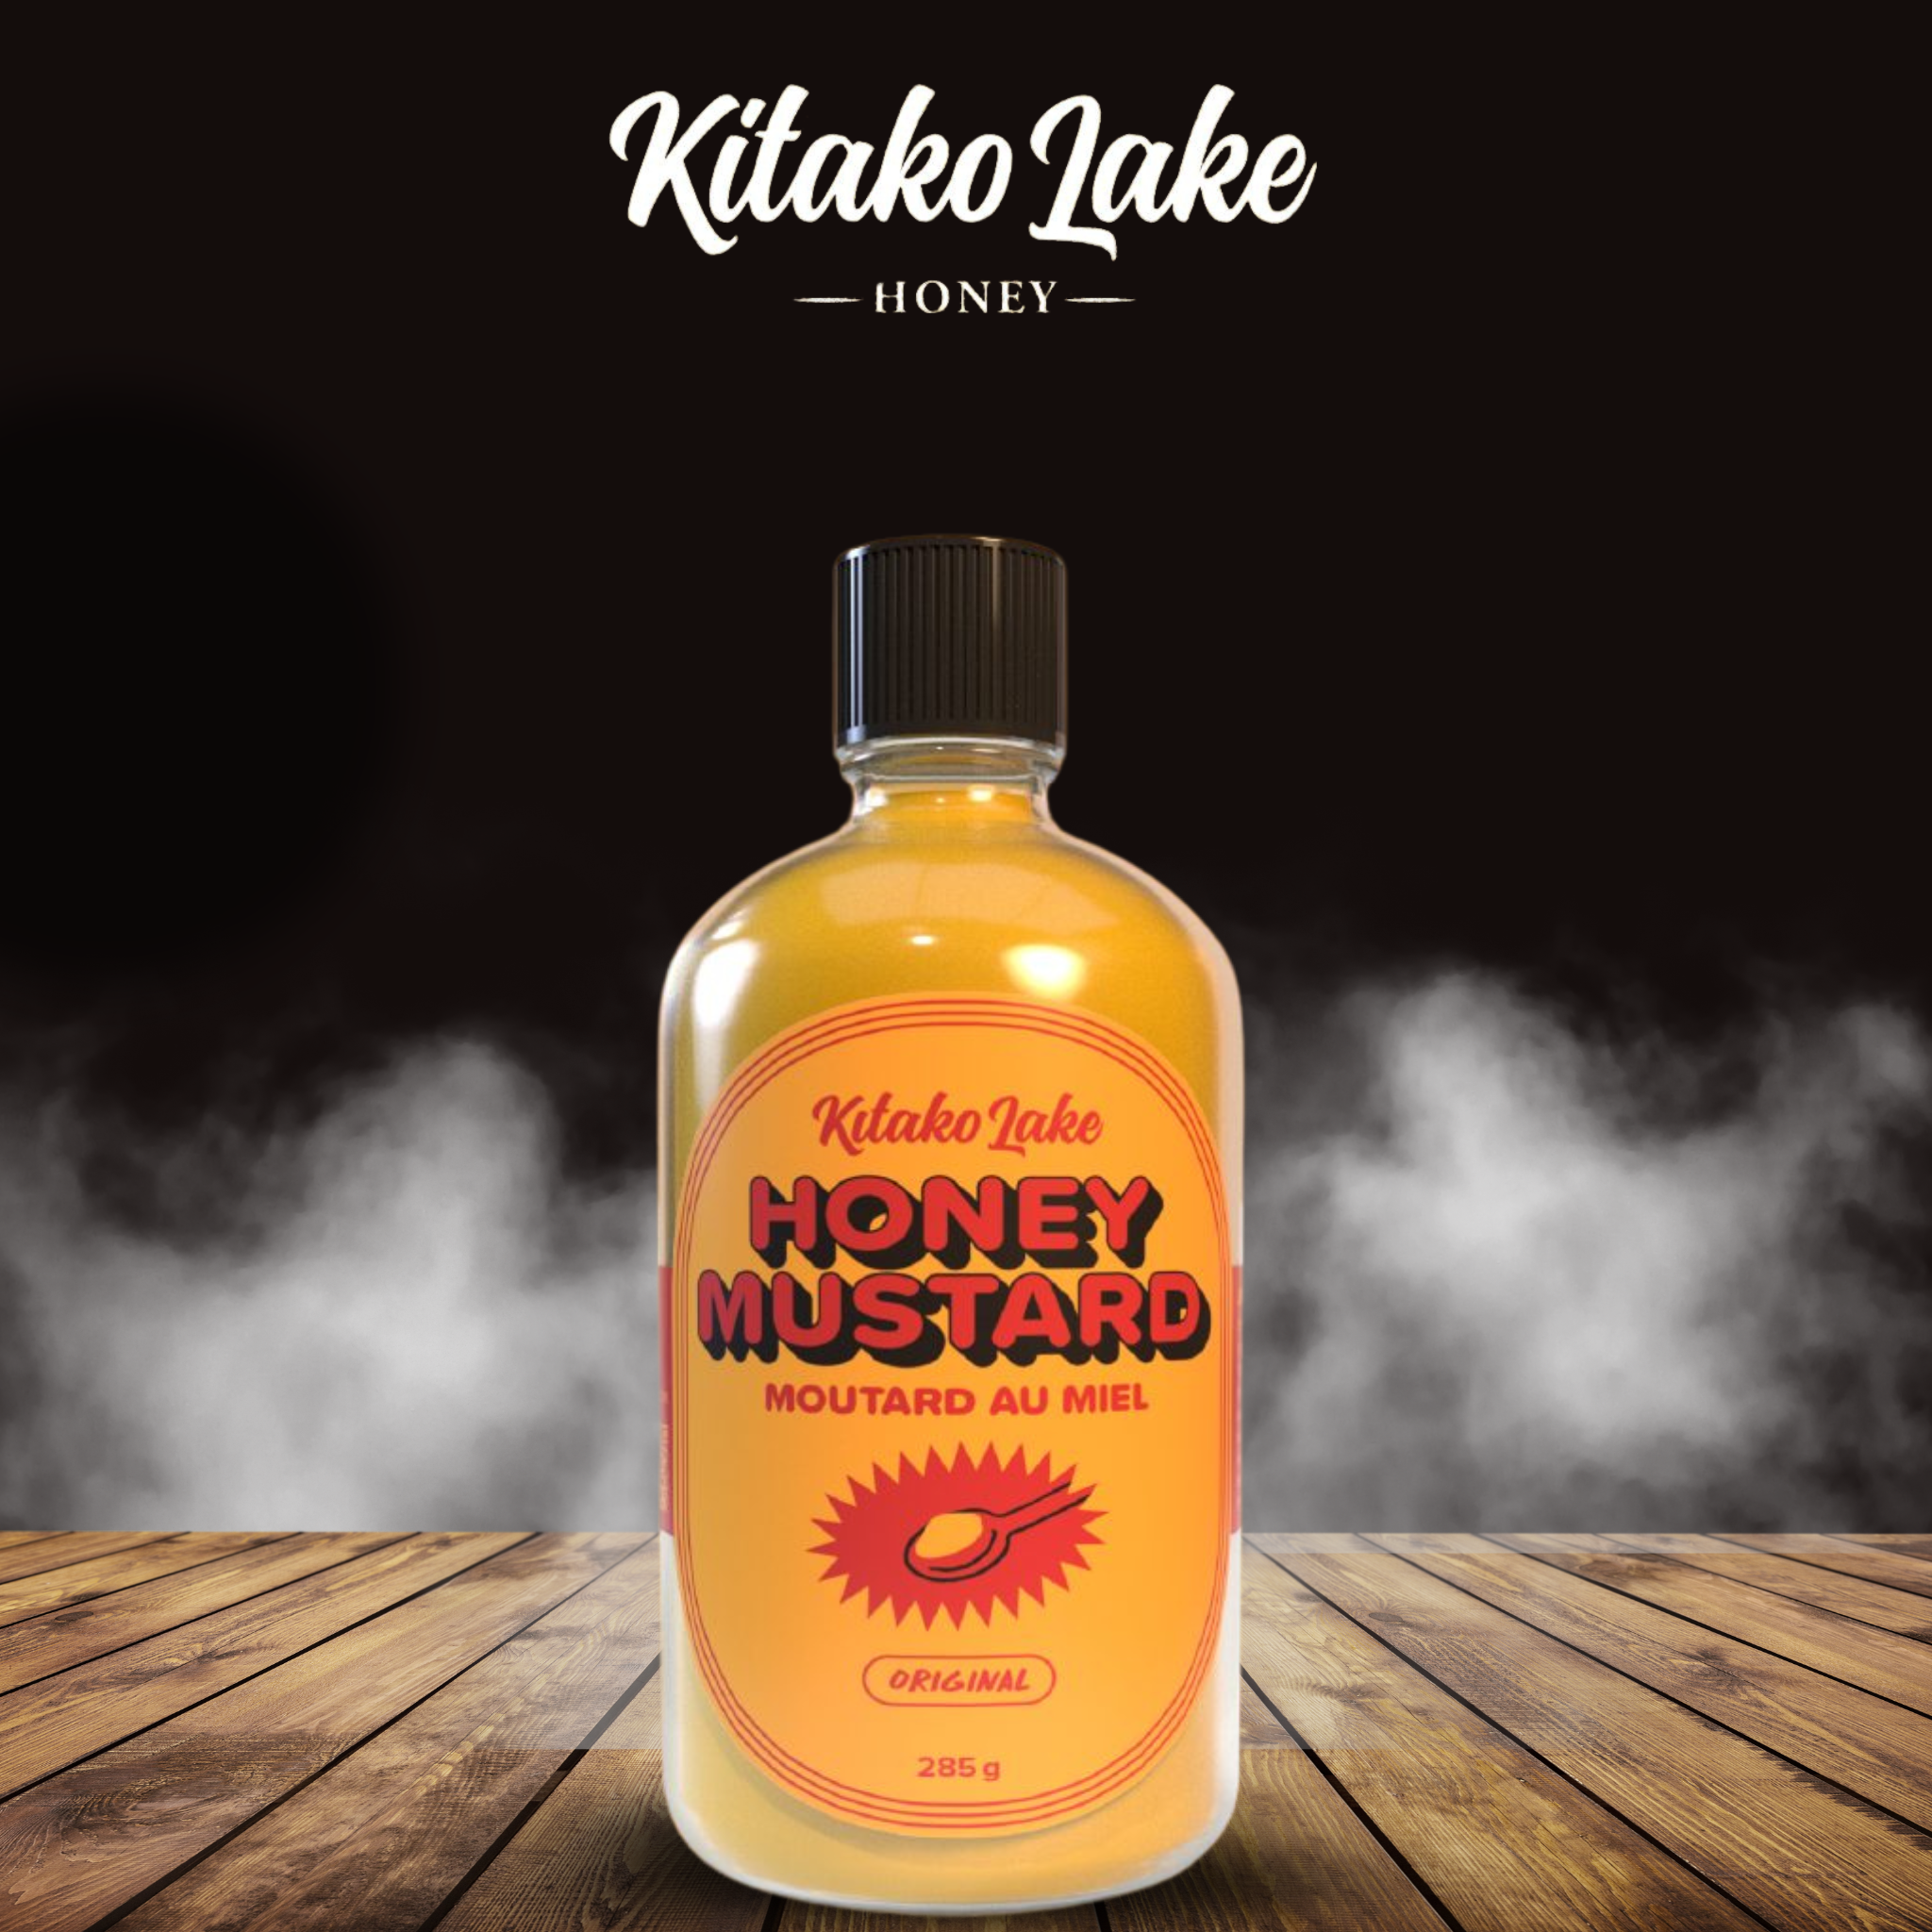 Kitako Lake Original Honey Mustard